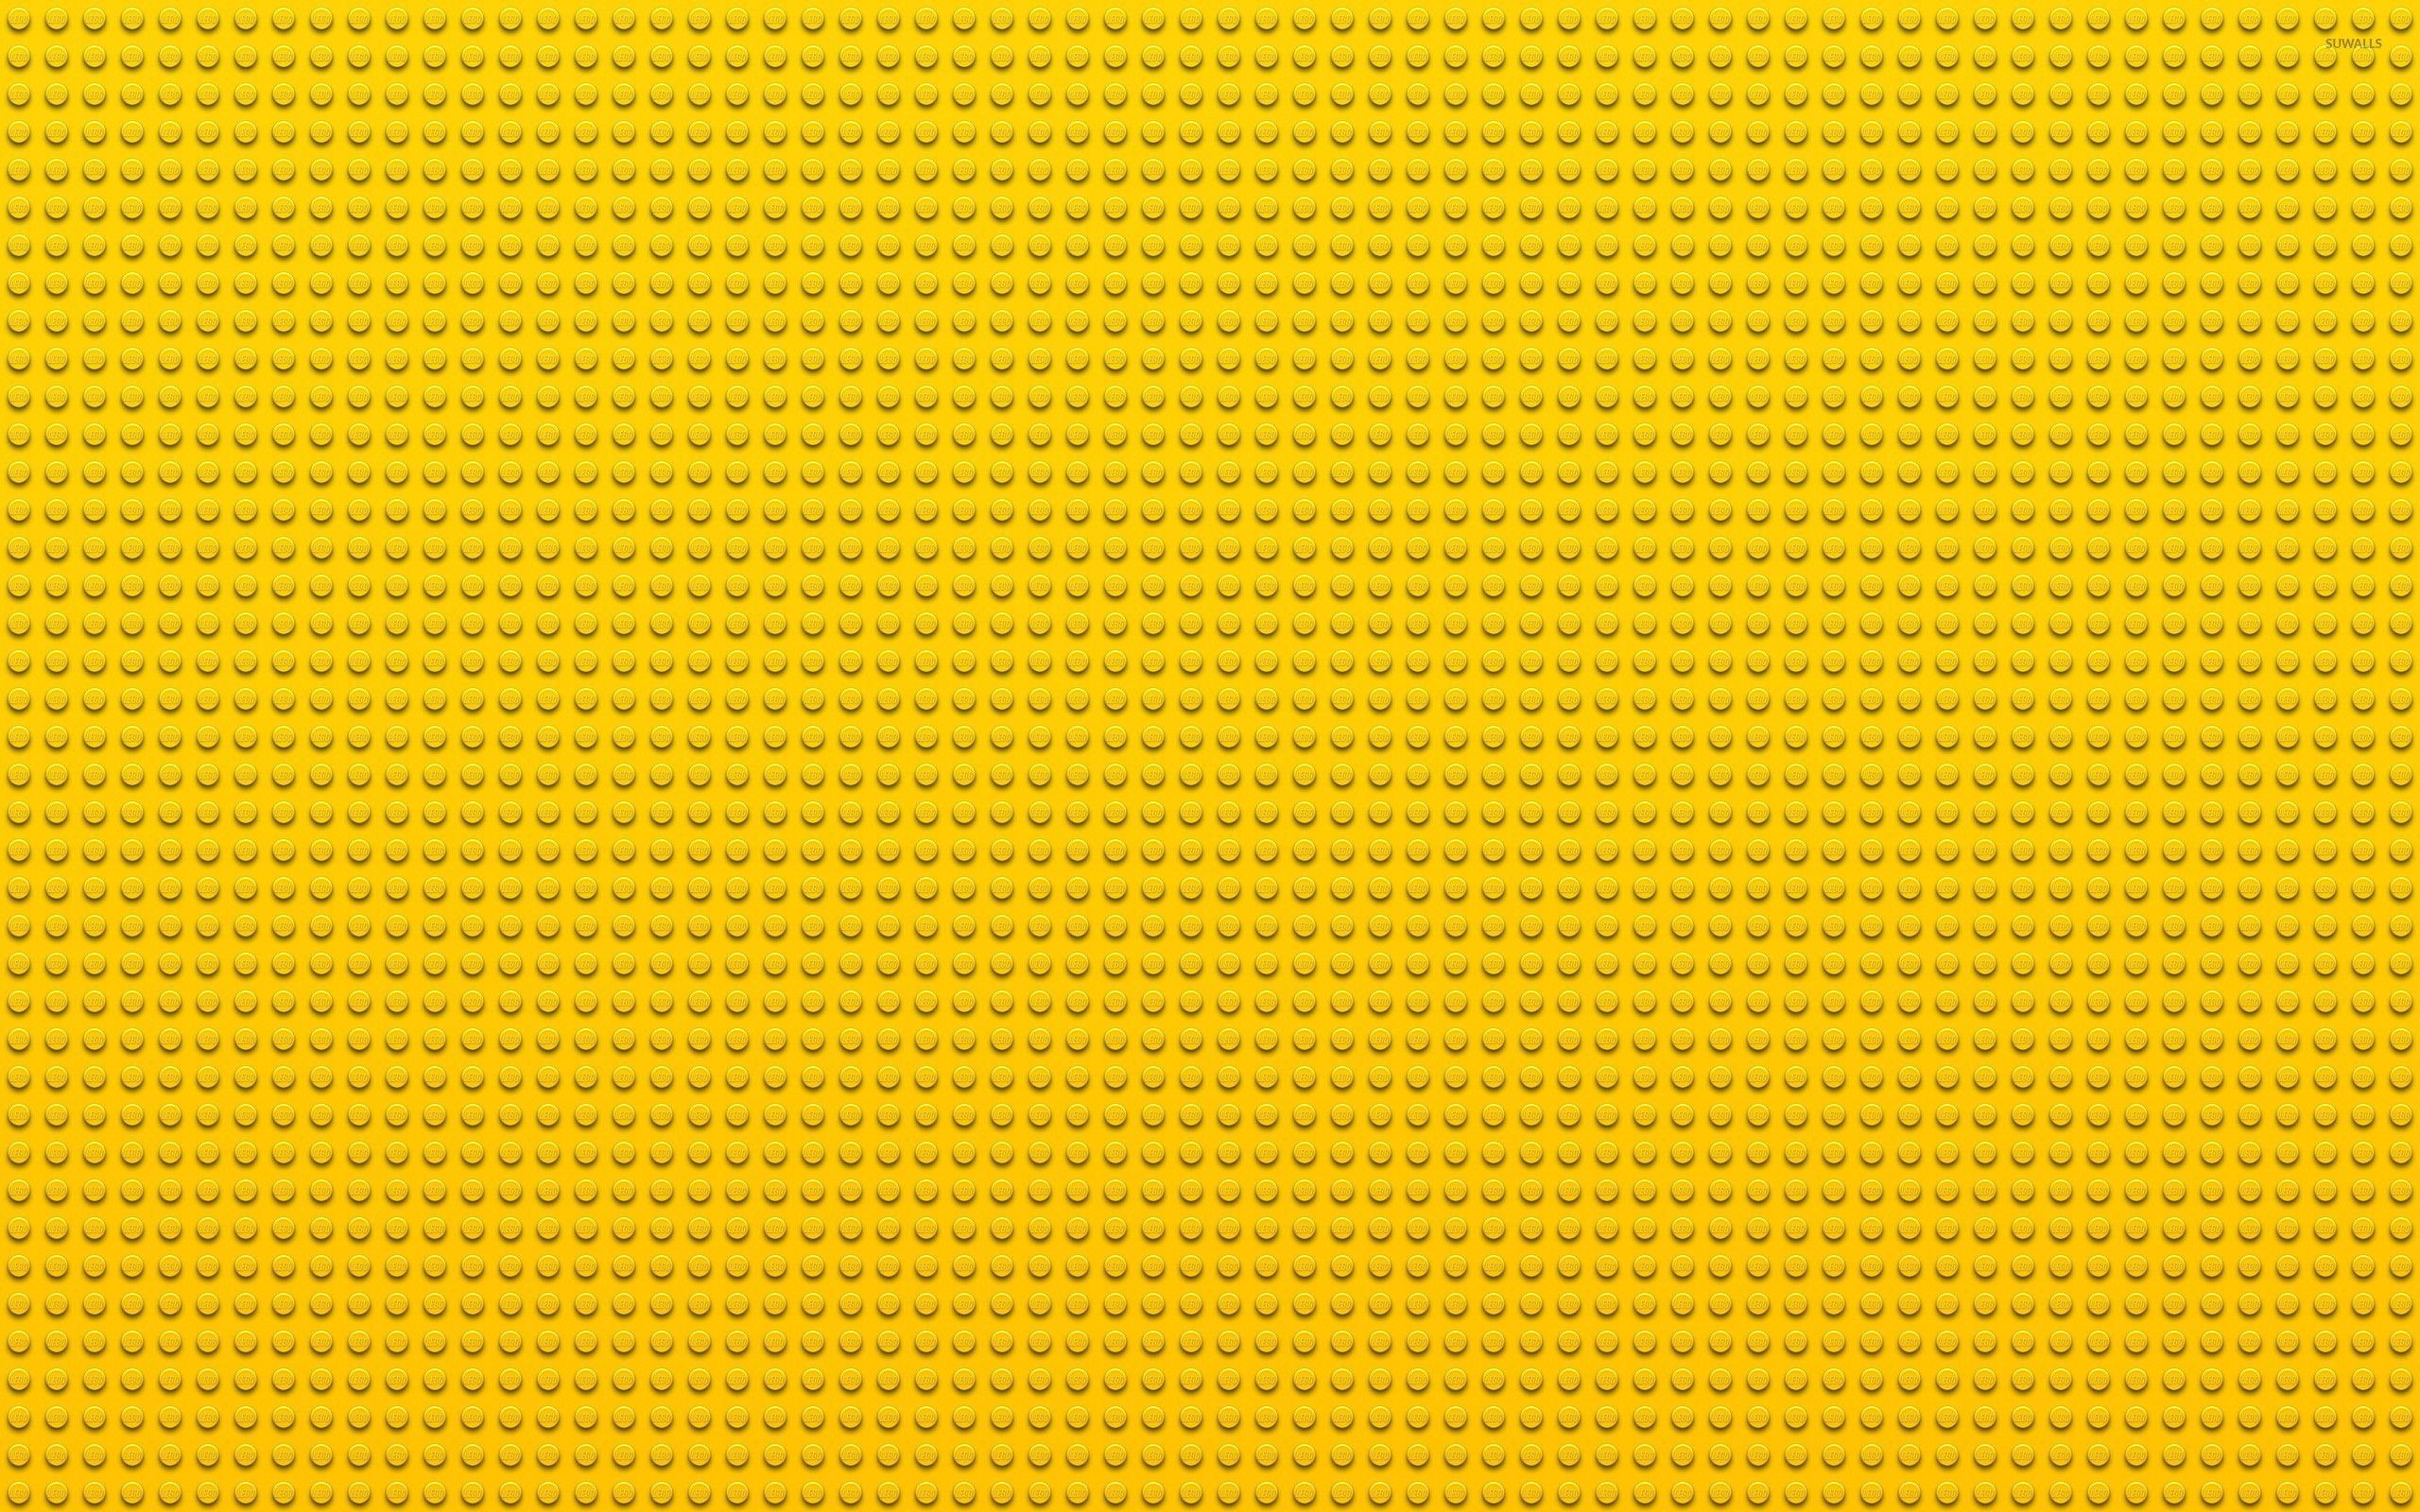 Yellow Lego wallpaper wallpaper